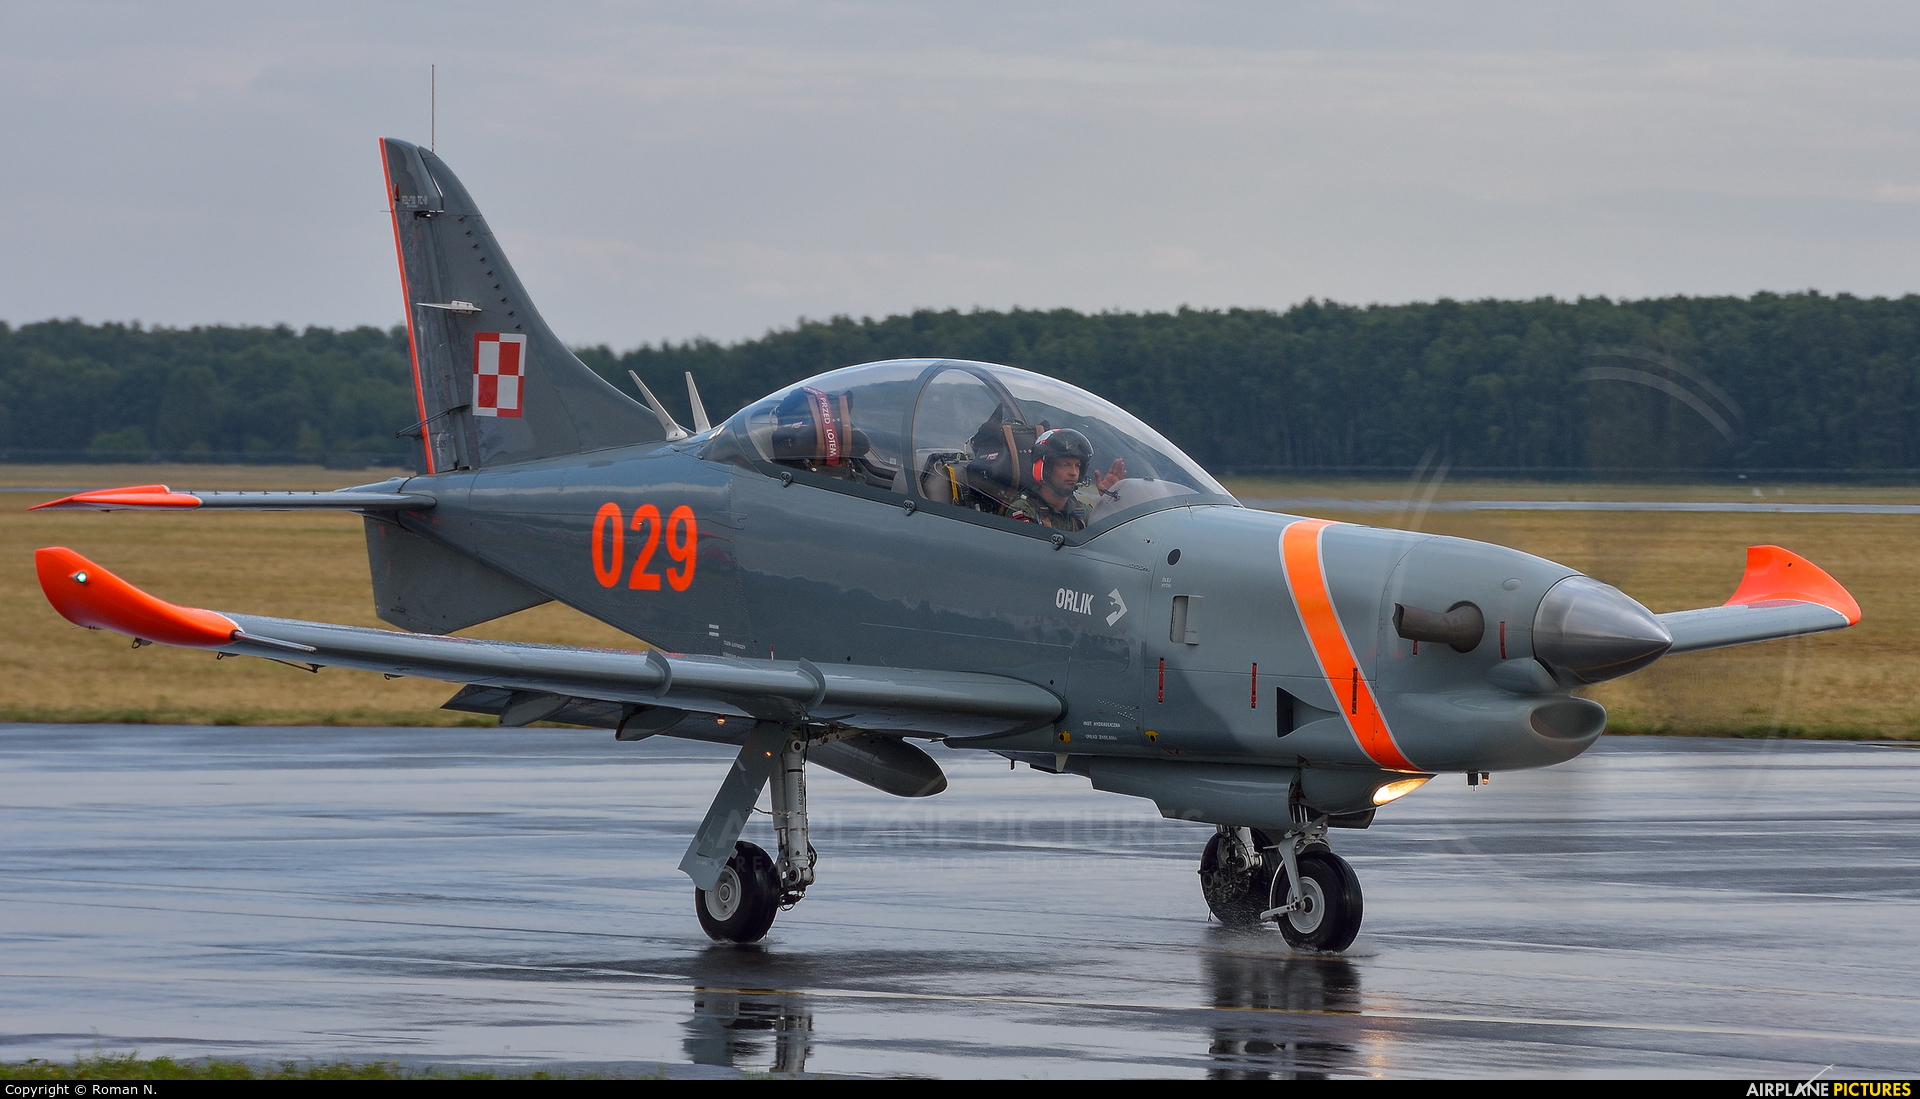 Poland - Air Force "Orlik Acrobatic Group" 029 aircraft at Radom - Sadków